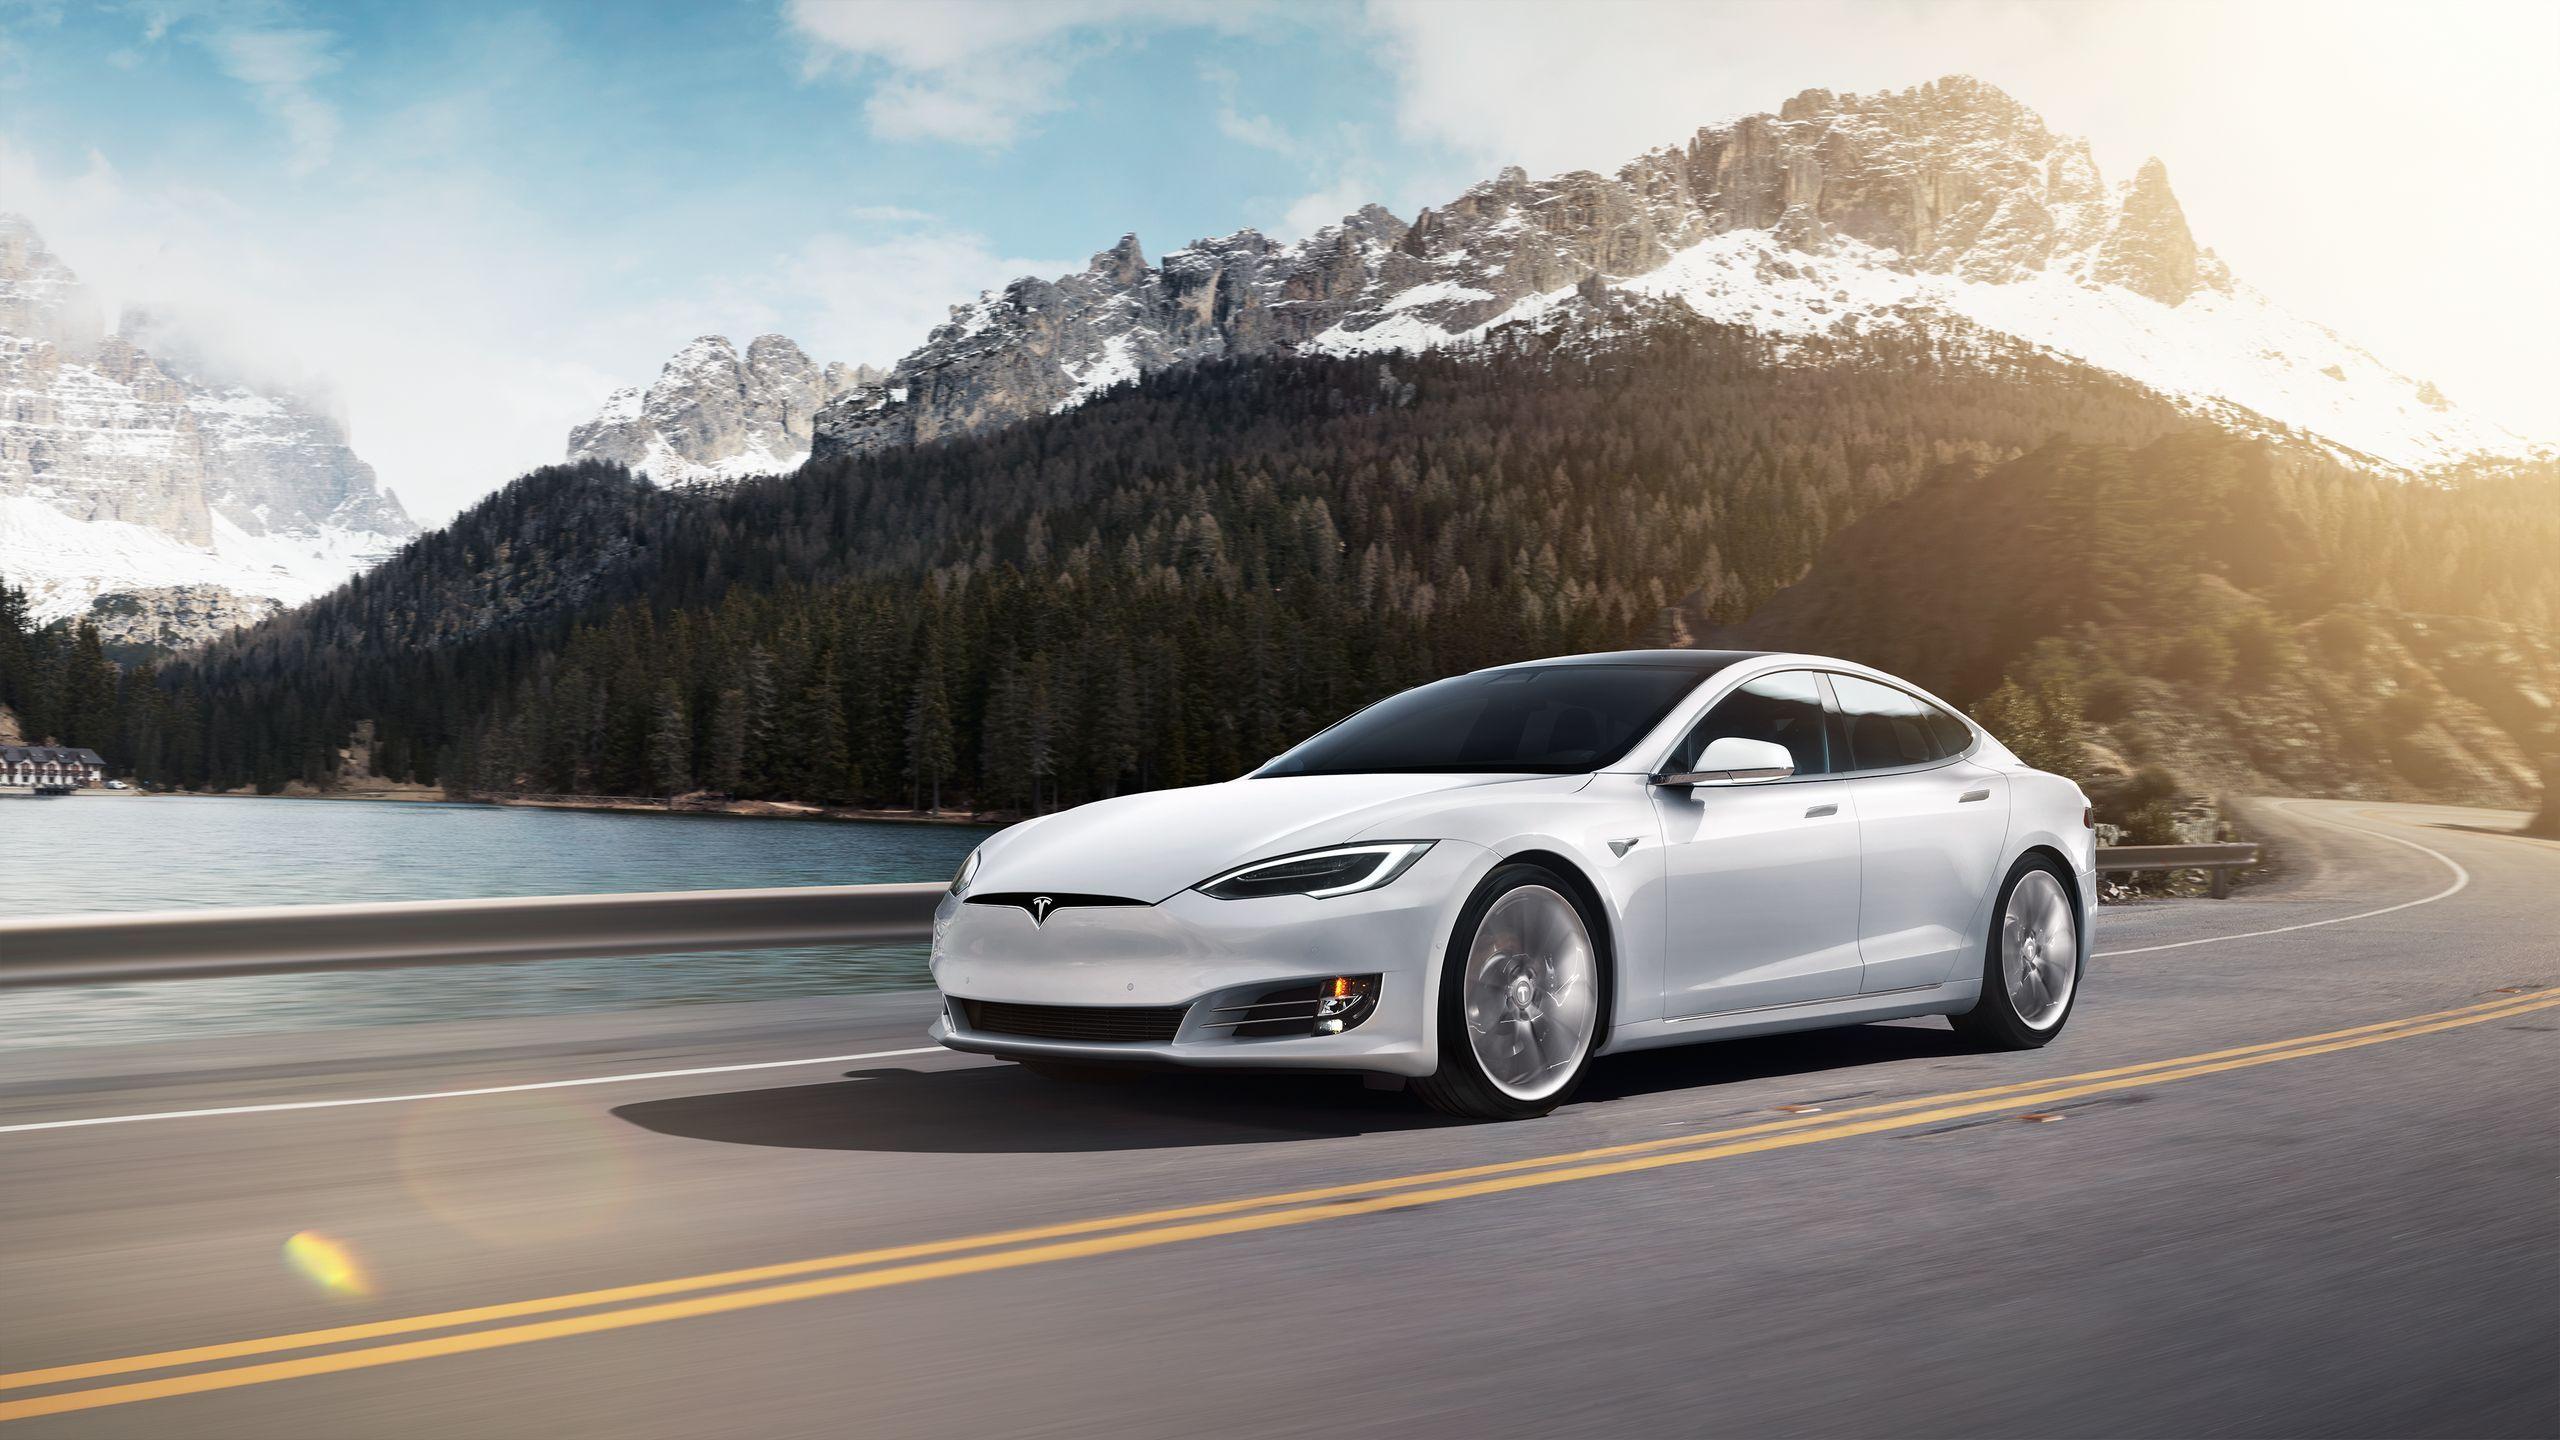 Wallpaper Wednesday: Tesla Model S, Model X and Model 3